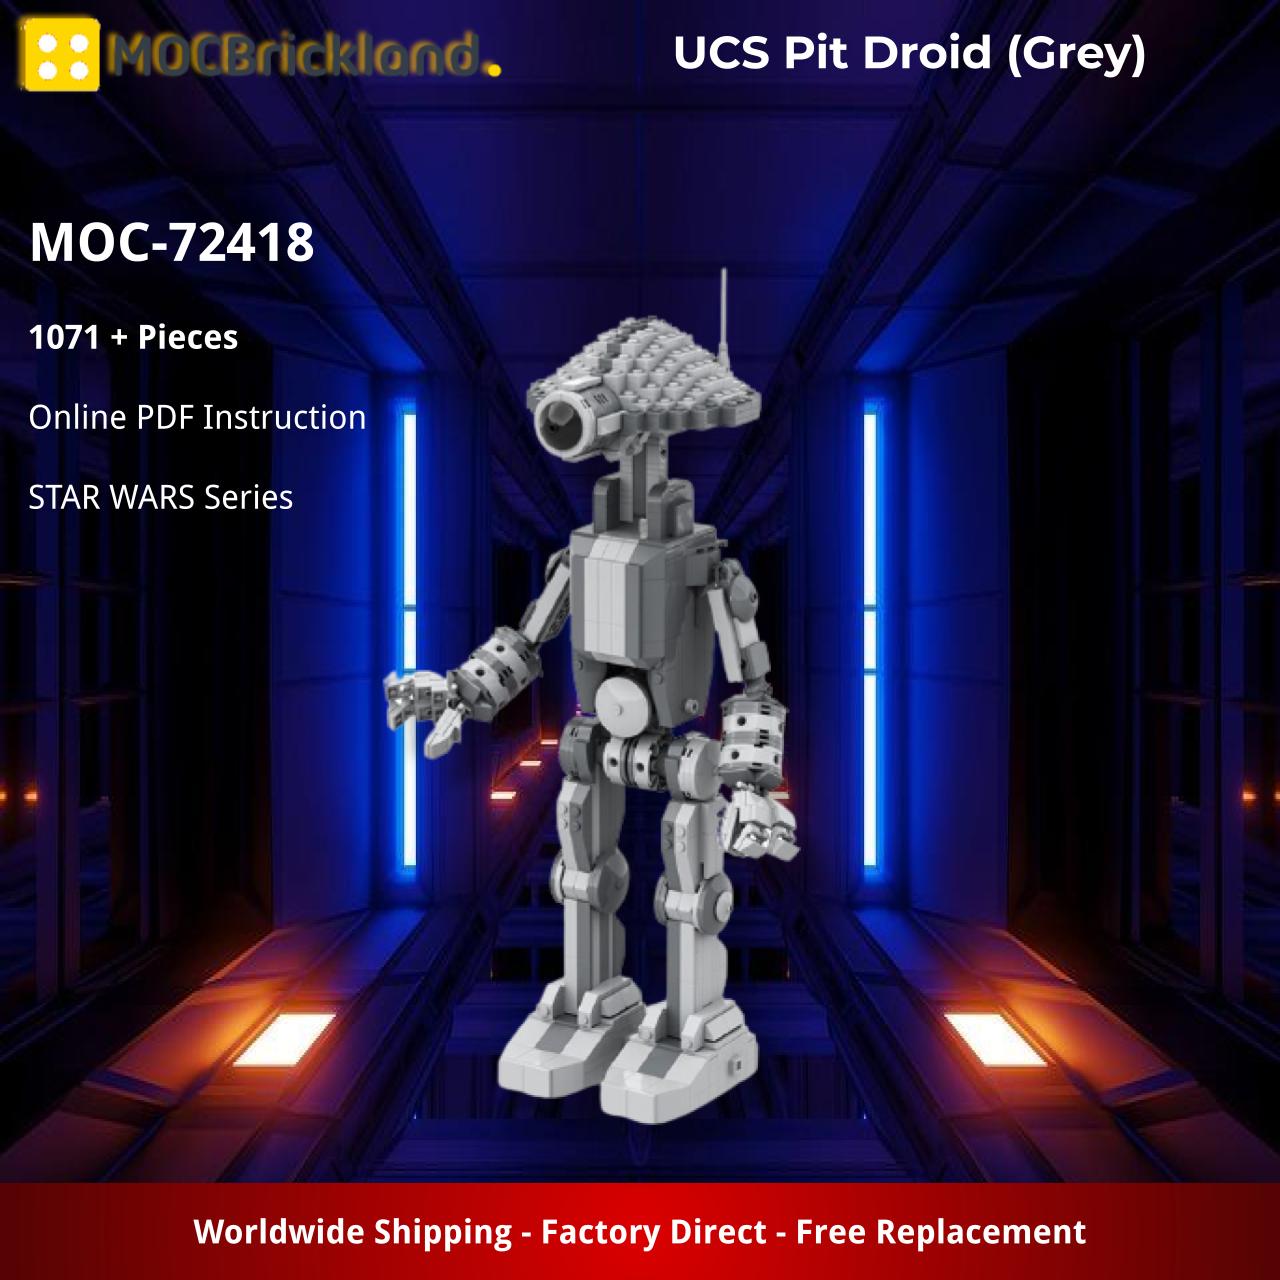 UCS Pit Droid (Grey) STAR WARS MOC-72418 by bowdbricks with 1071 pieces